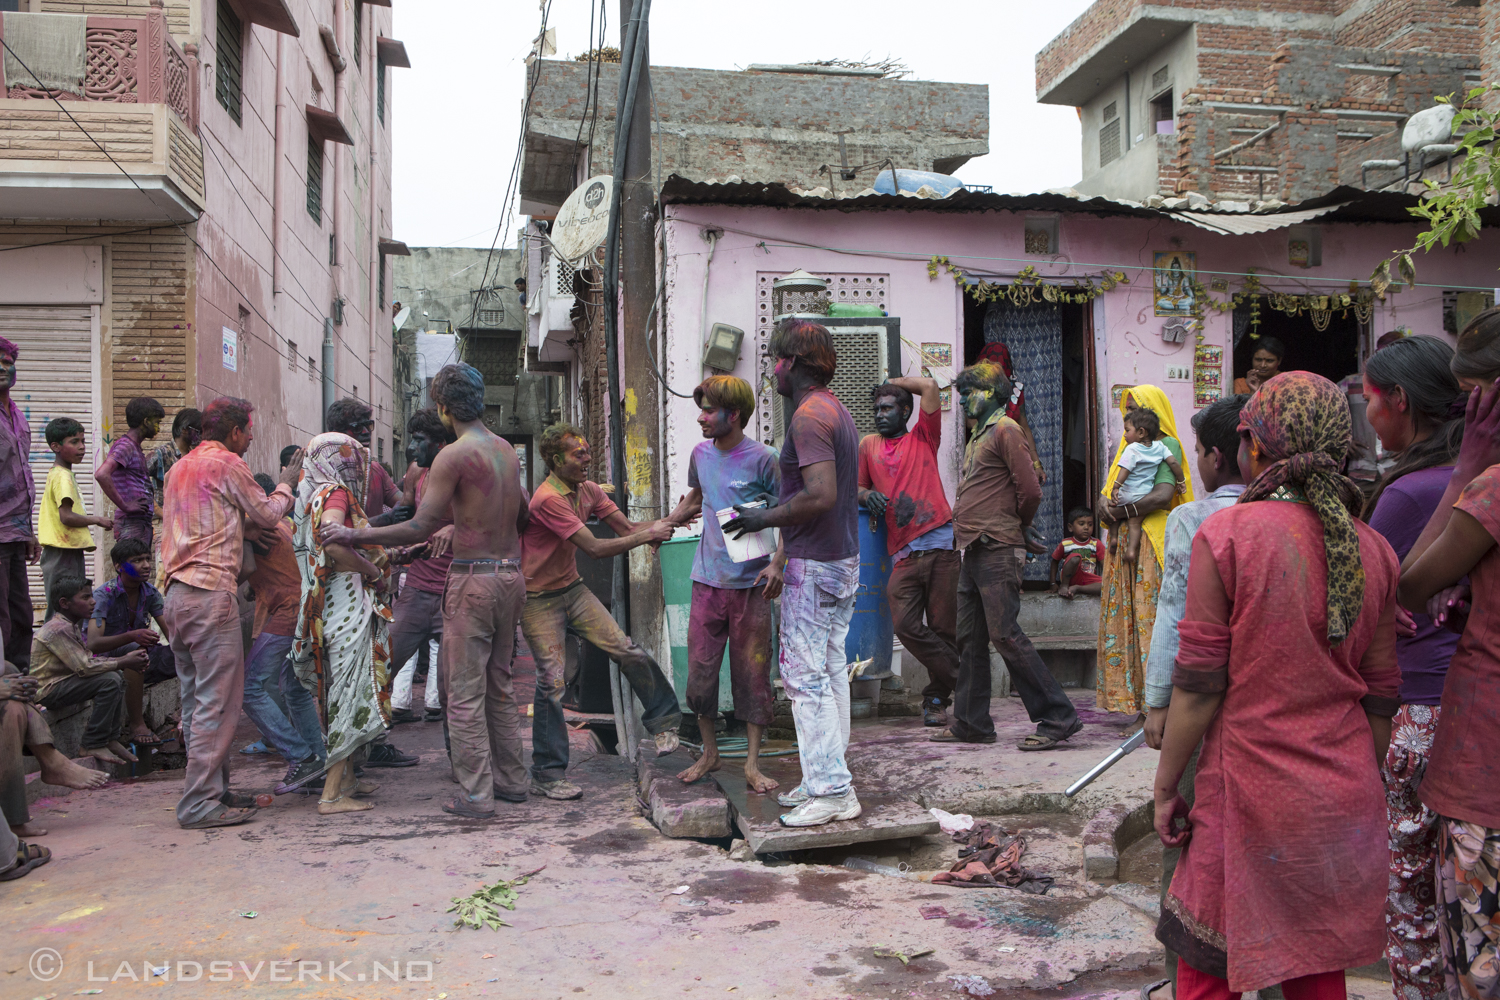 Celebrating Holi. Jaipur, India. 

(Canon EOS 5D Mark III / Canon EF 24-70mm f/2.8 L USM)